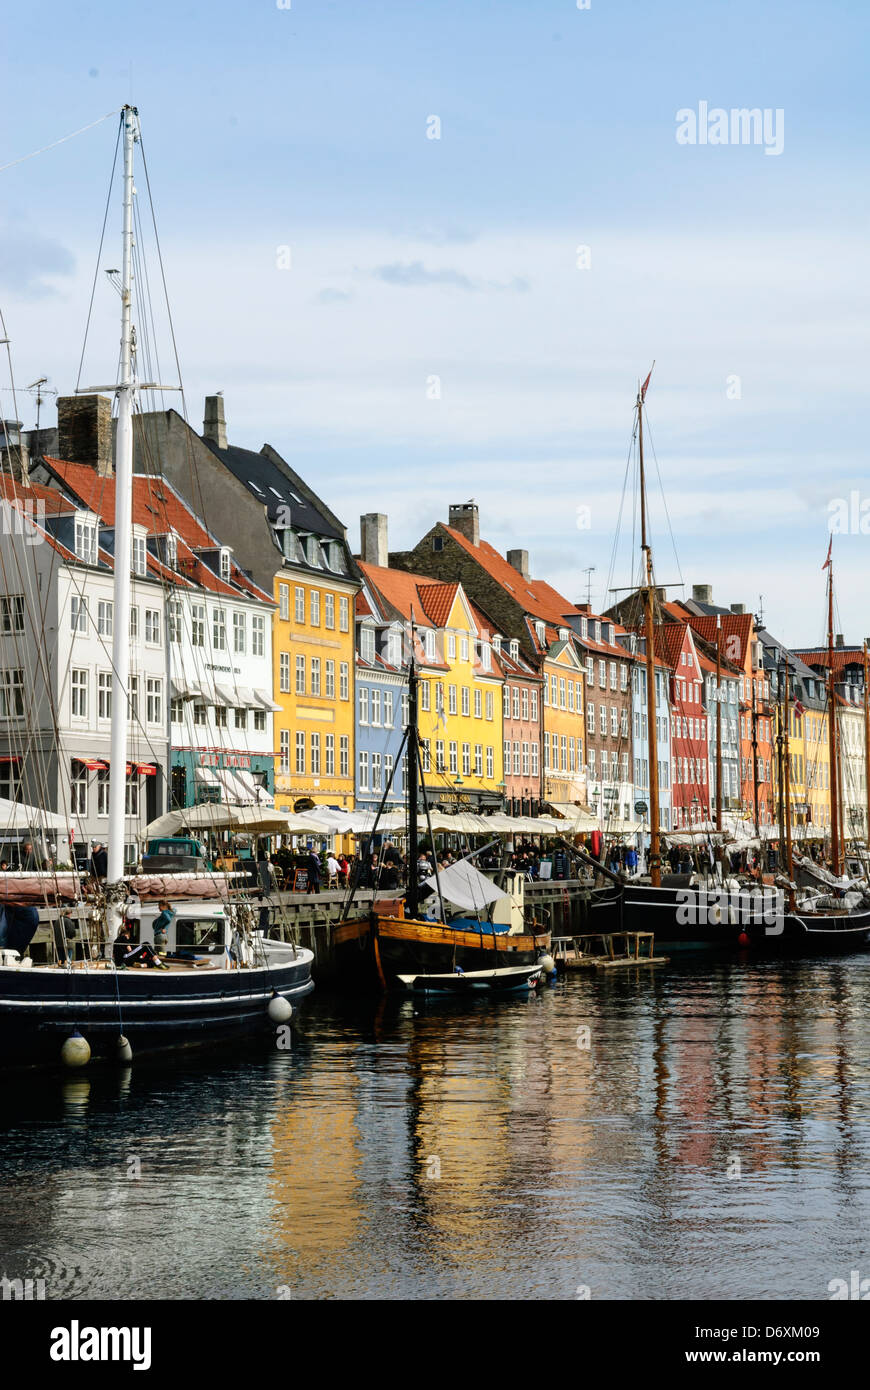 View of Nyhavn in Copenhagen, Denmark, Europe Image taken from public ground Stock Photo